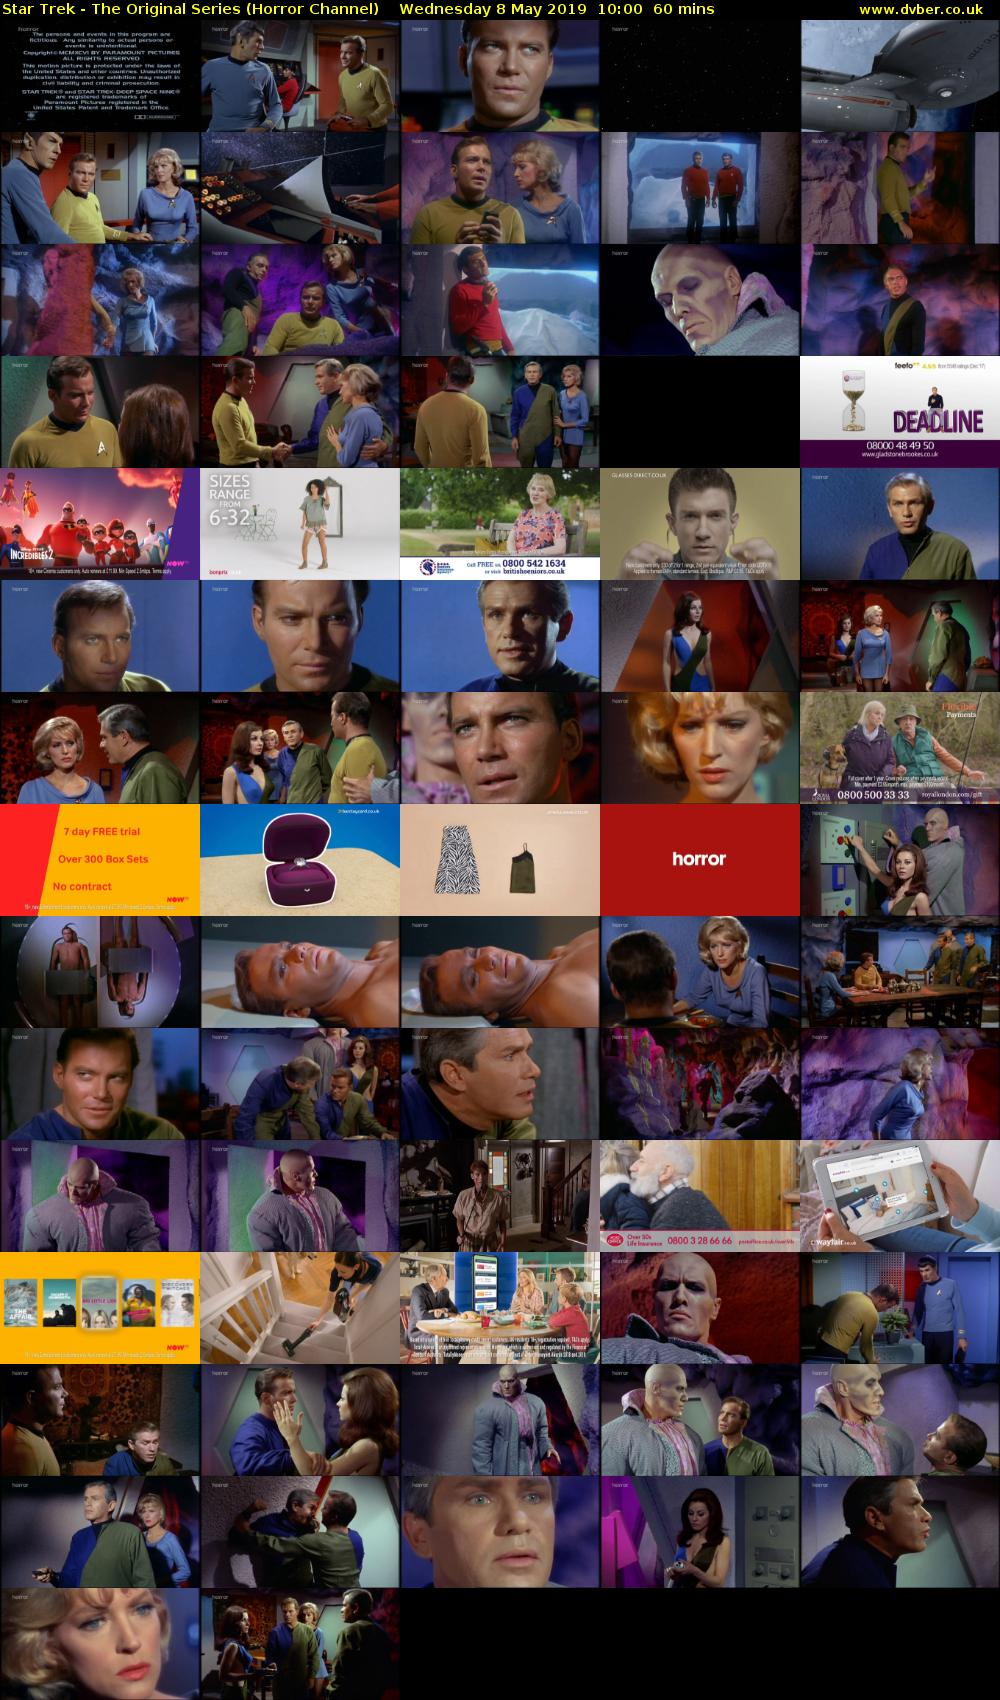 Star Trek - The Original Series (Horror Channel) Wednesday 8 May 2019 10:00 - 11:00